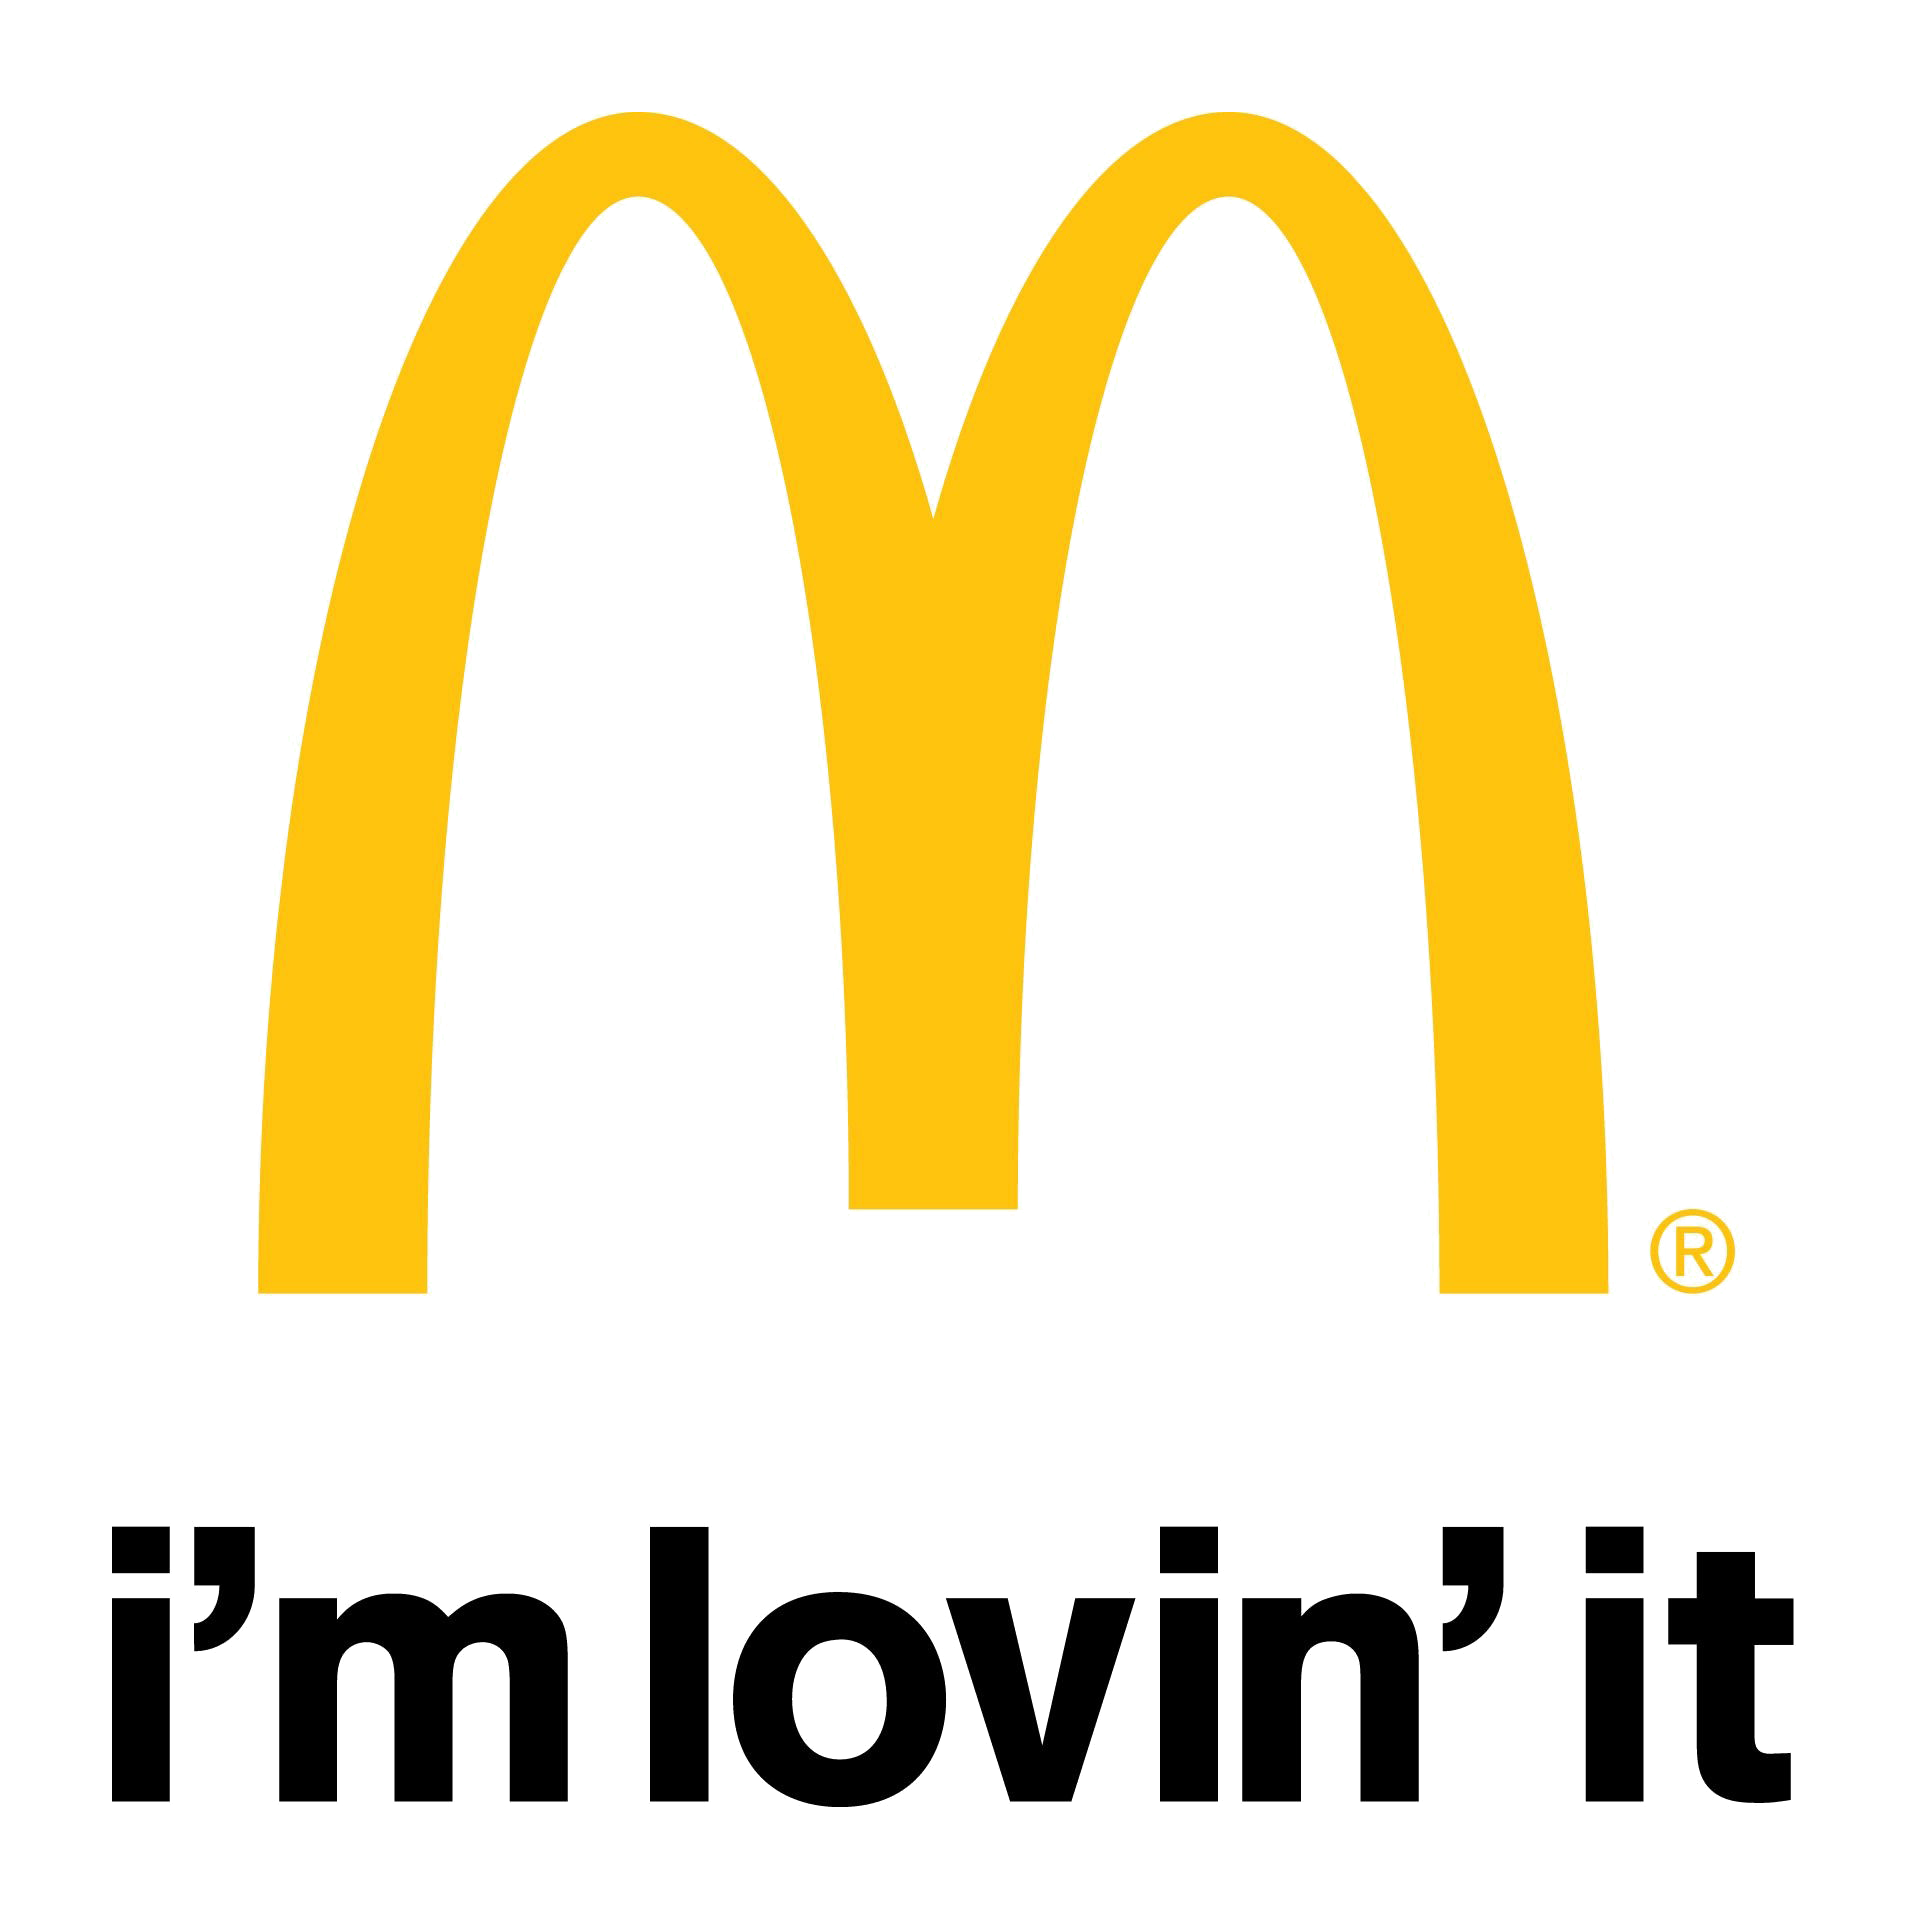 McDonalds Logo PNG Image - PurePNG | Free transparent CC0 PNG ...